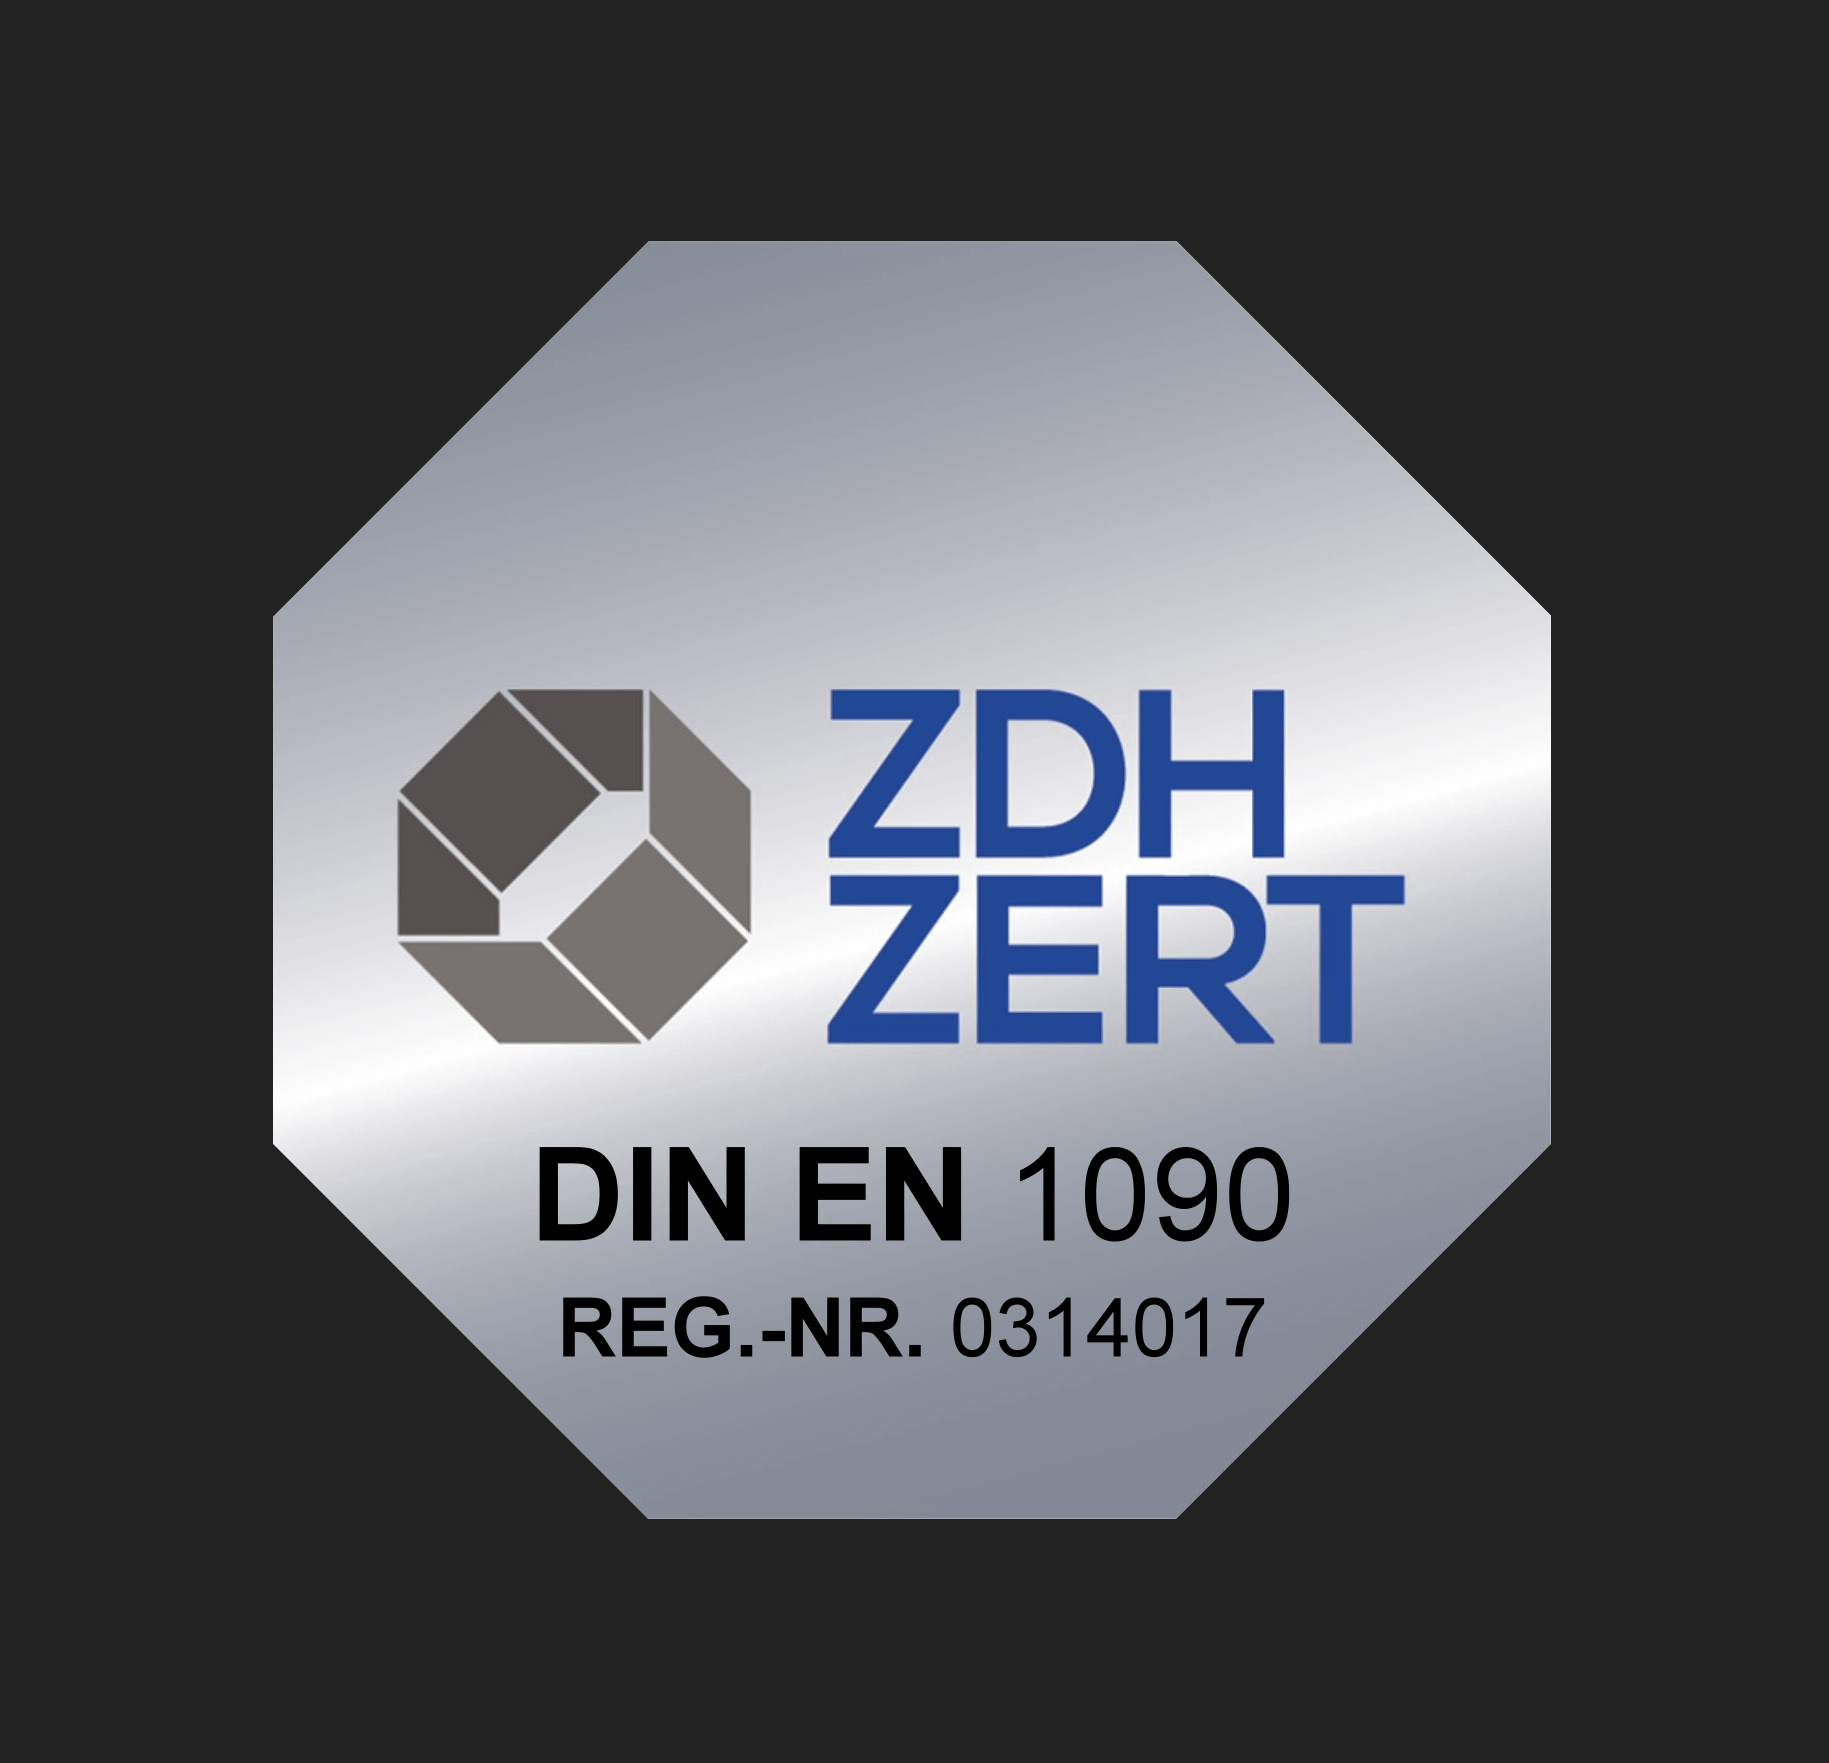 ZDH-ZERT DIN EN 1090